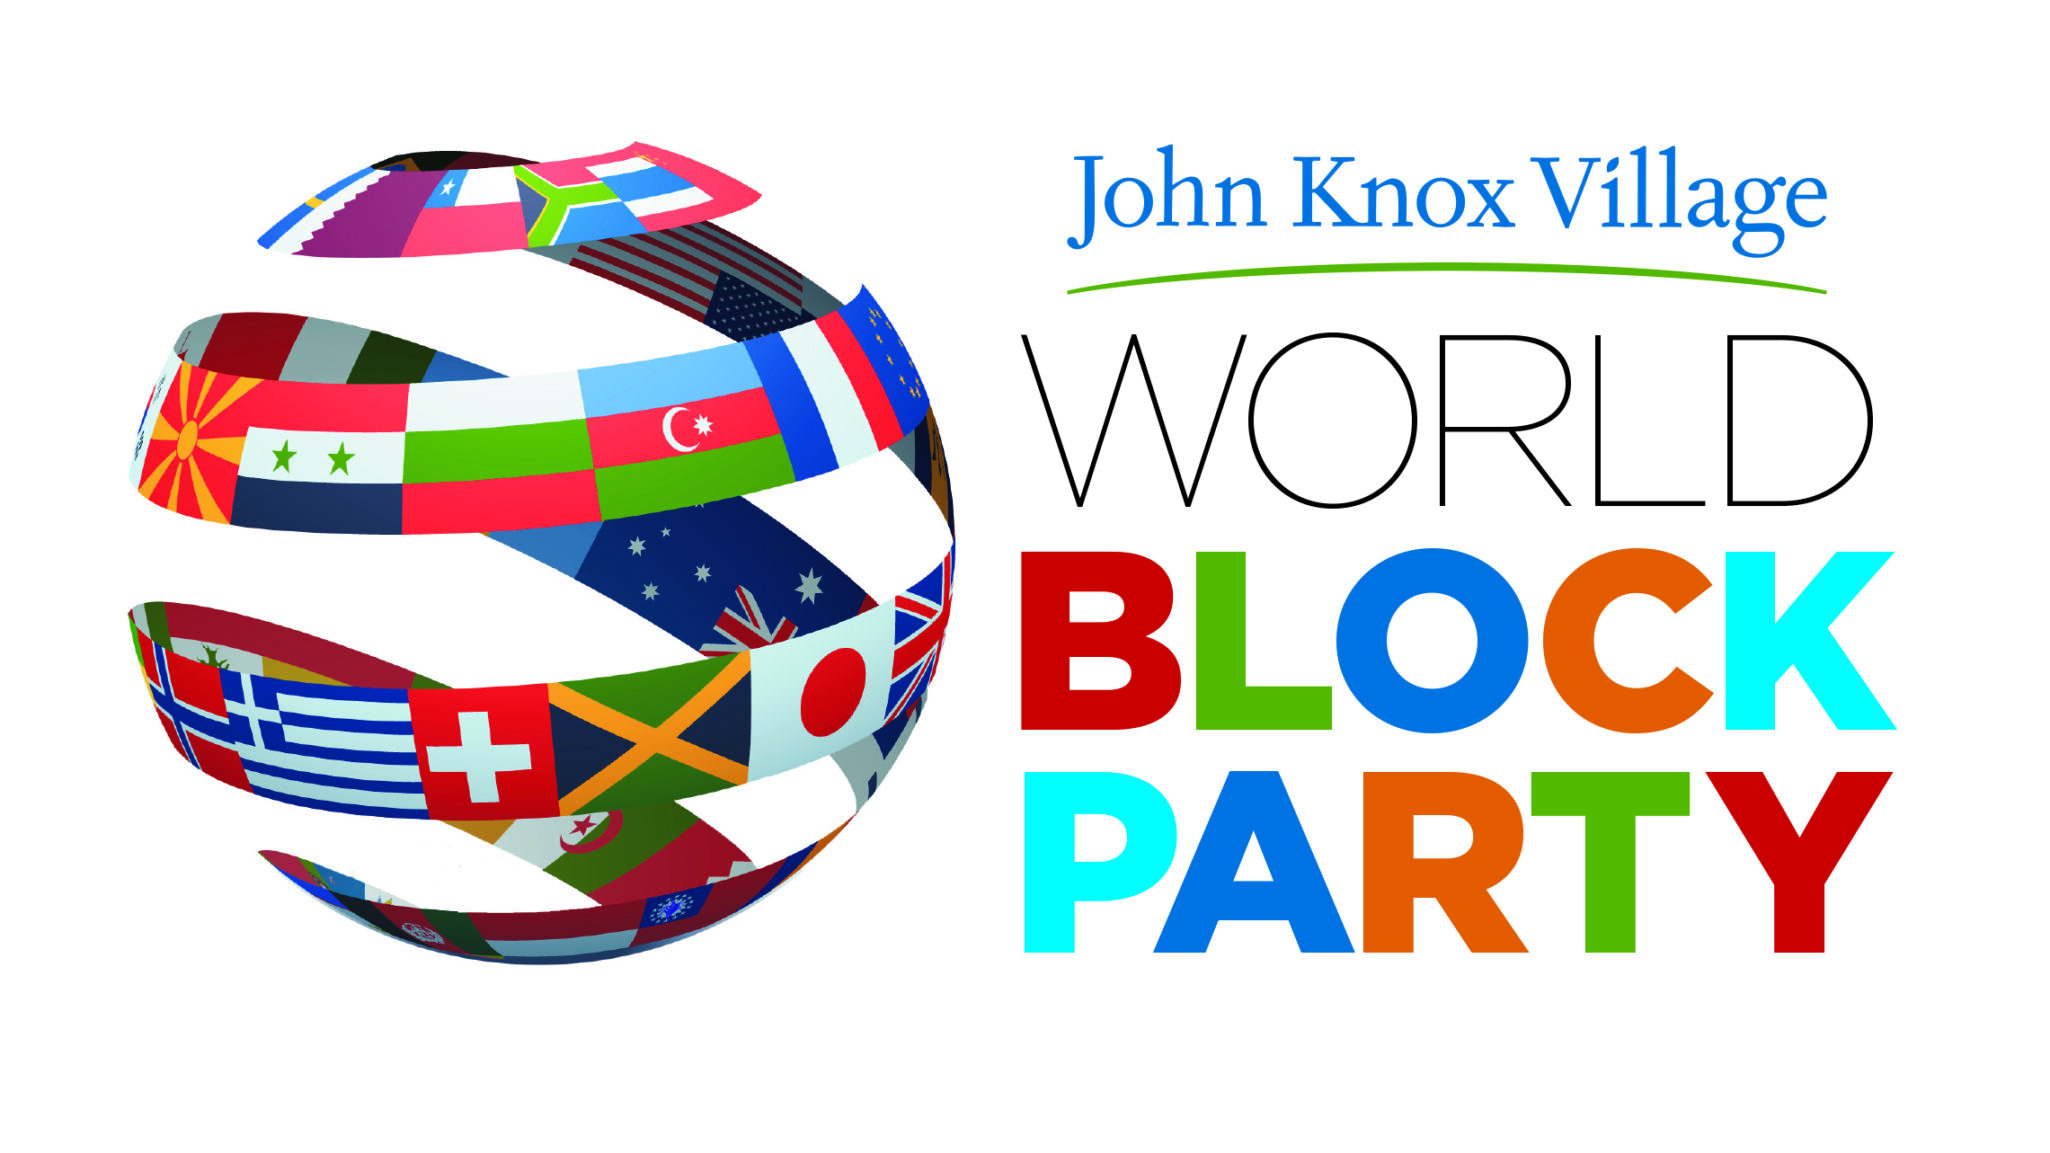 World block party logo